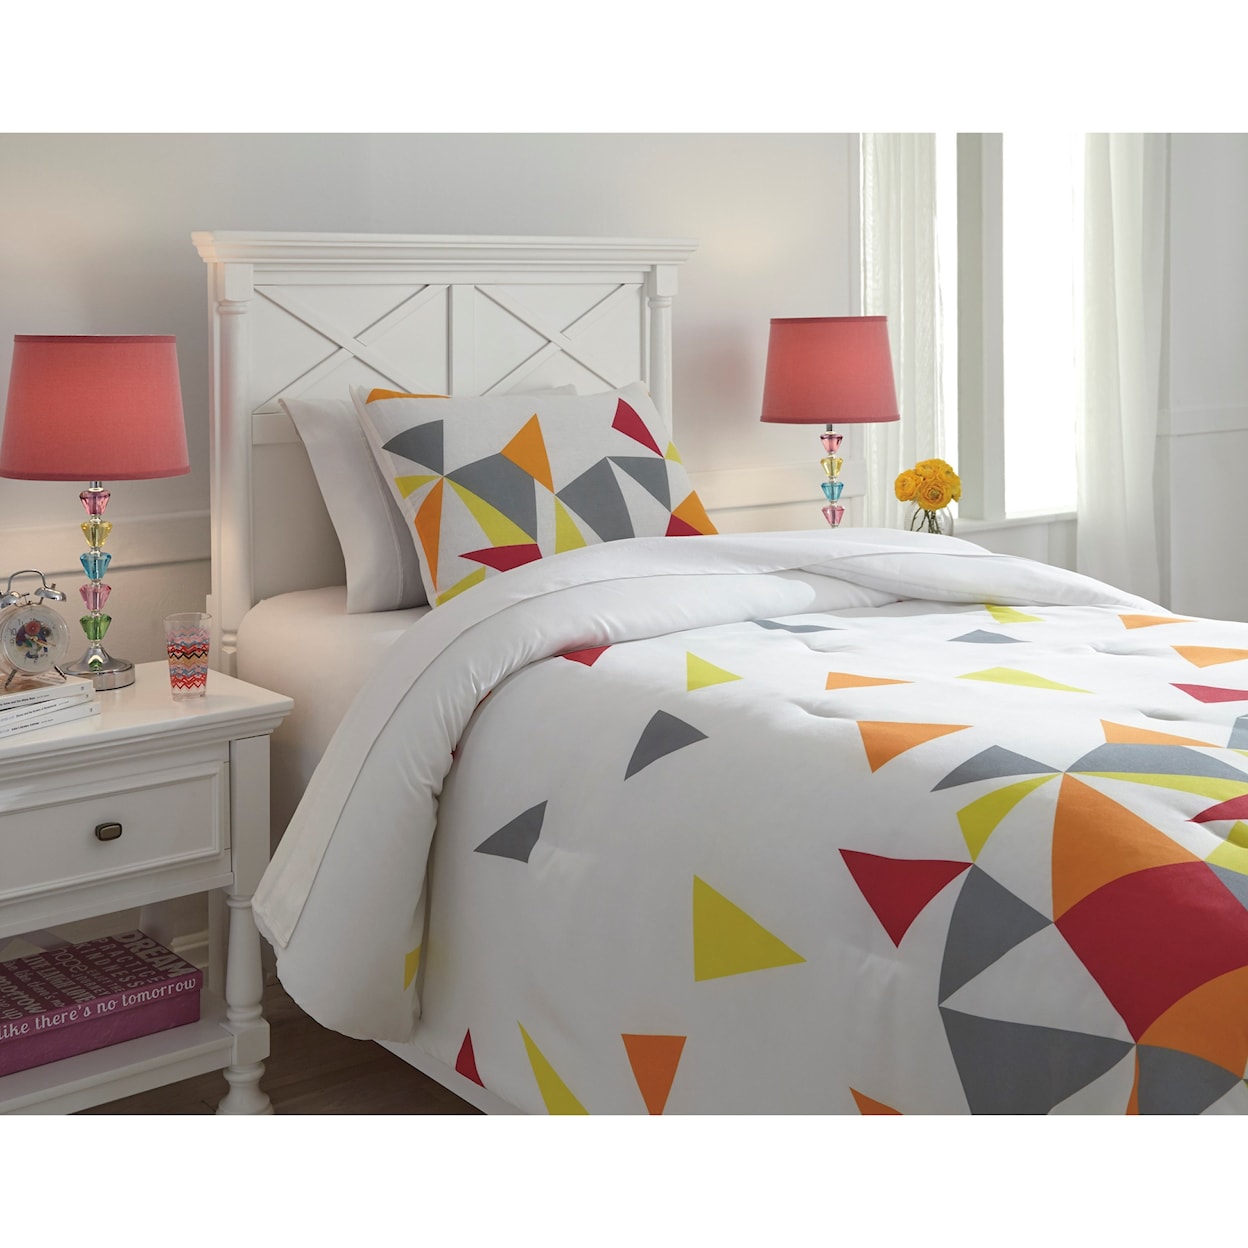 Ashley Furniture Signature Design Bedding Sets Twin Maxie Multi Comforter Set